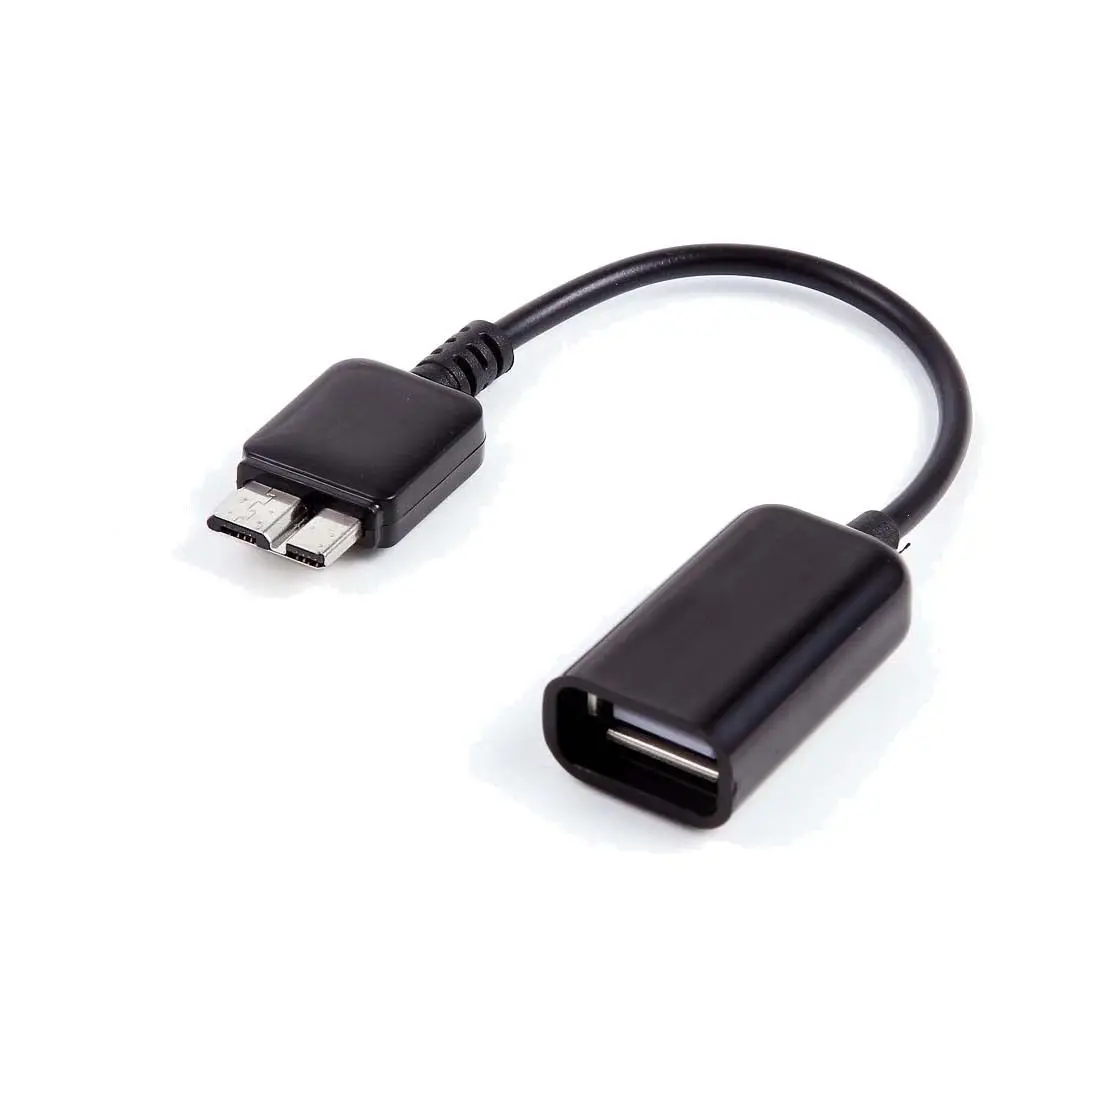 Премиум USB3.0 OTG Хост кабель адаптер Шнур для Nokia Lumia 2520 левоно thinkpad8 samsung Galaxy Note 3 S5 i9600 G900